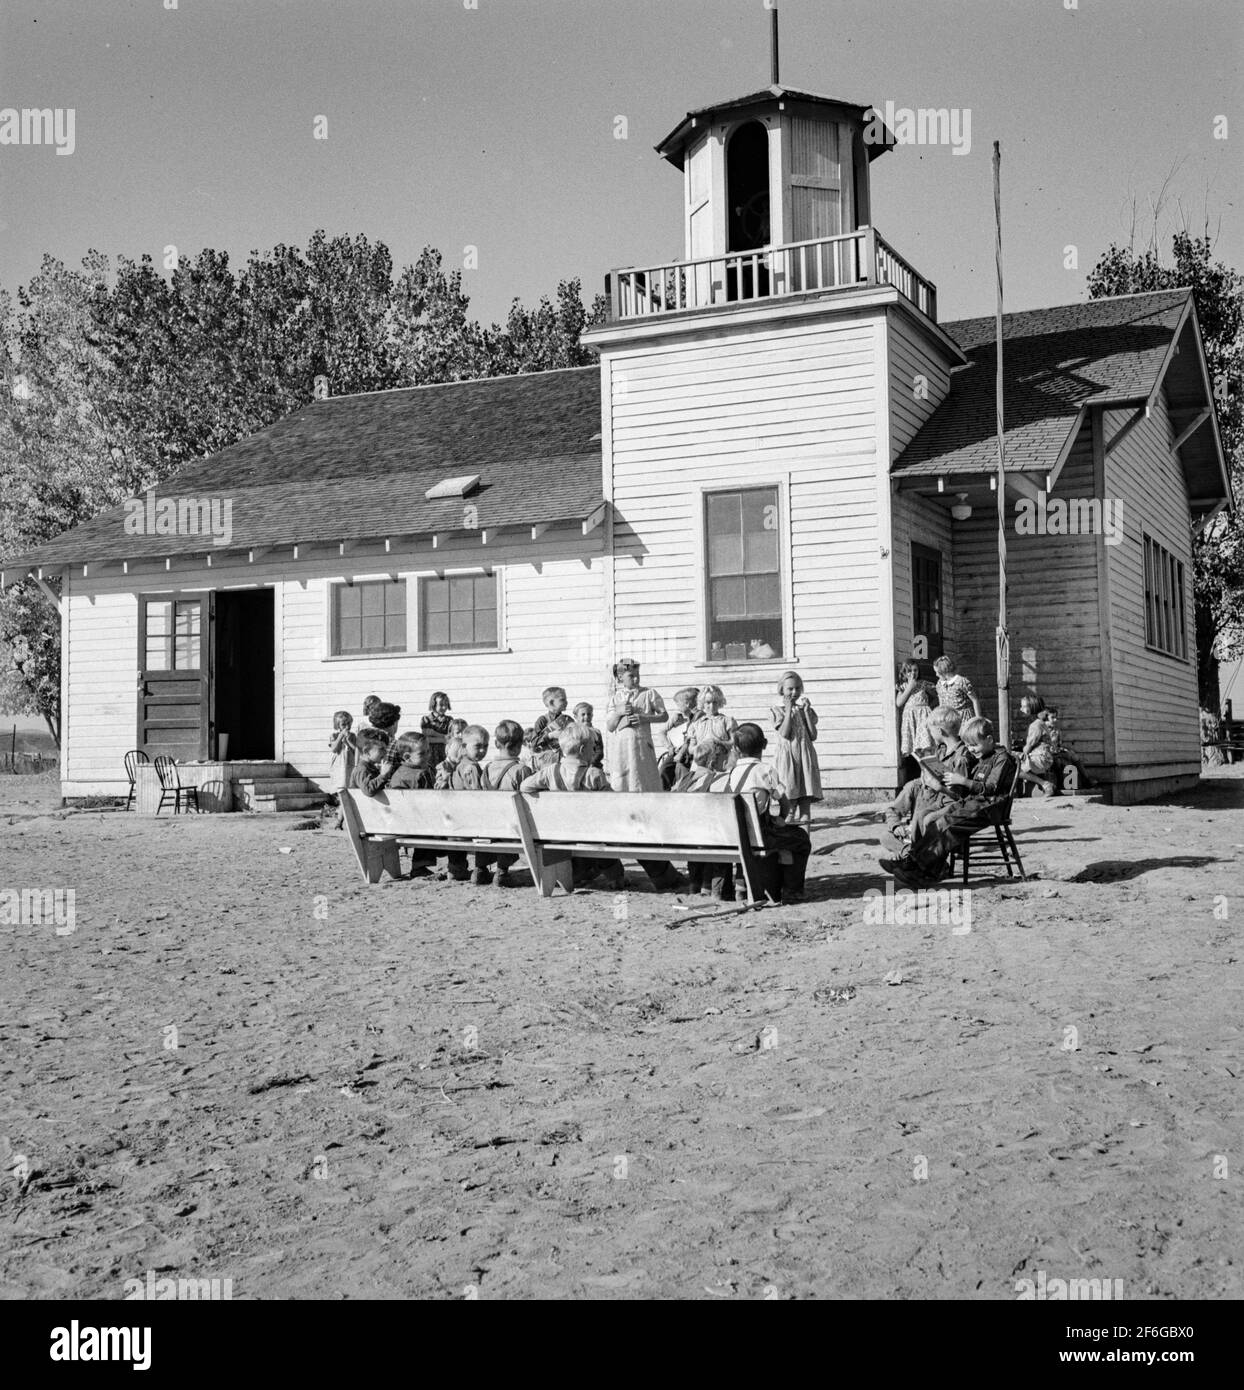 Lincoln Bank Schule und Hof. Nahe Ontario, Malheur County, Oregon. 1939. Foto von Dorothea lange. Stockfoto